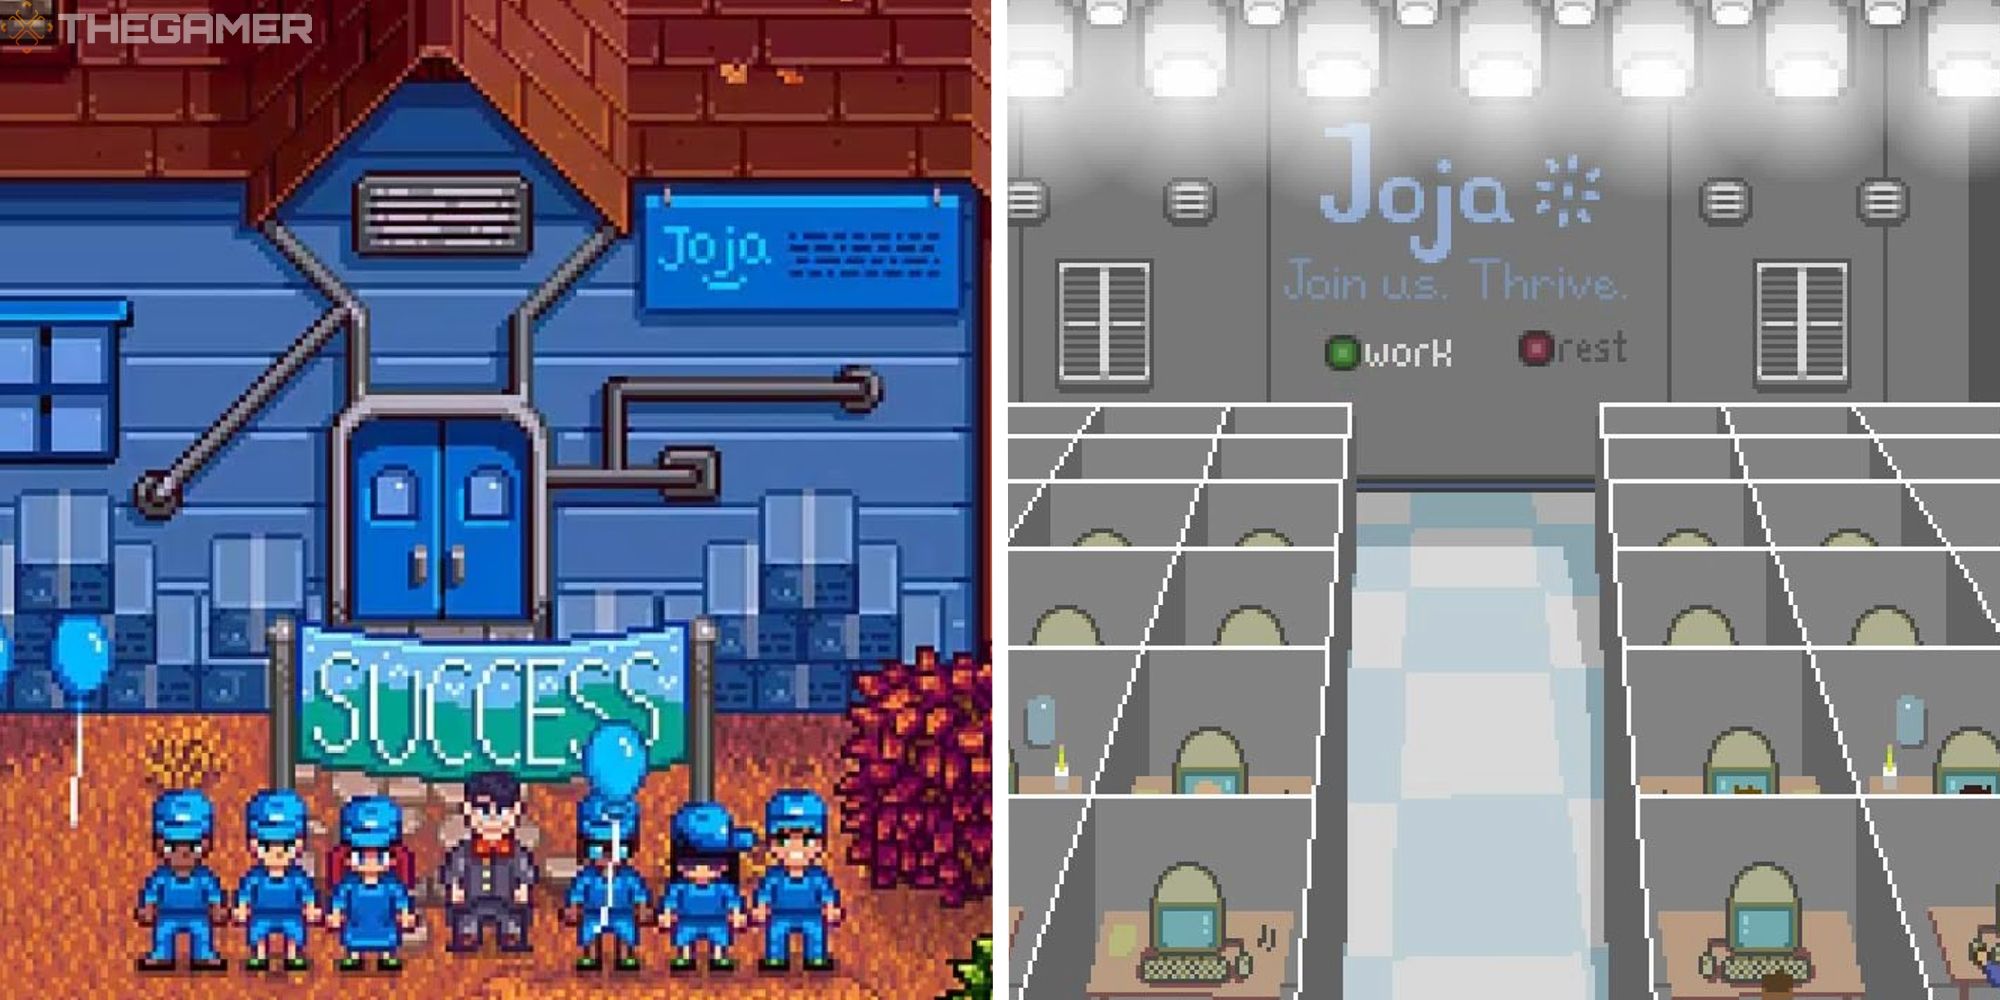 image of joja warehouse opening, next to image of joja corp cubicles